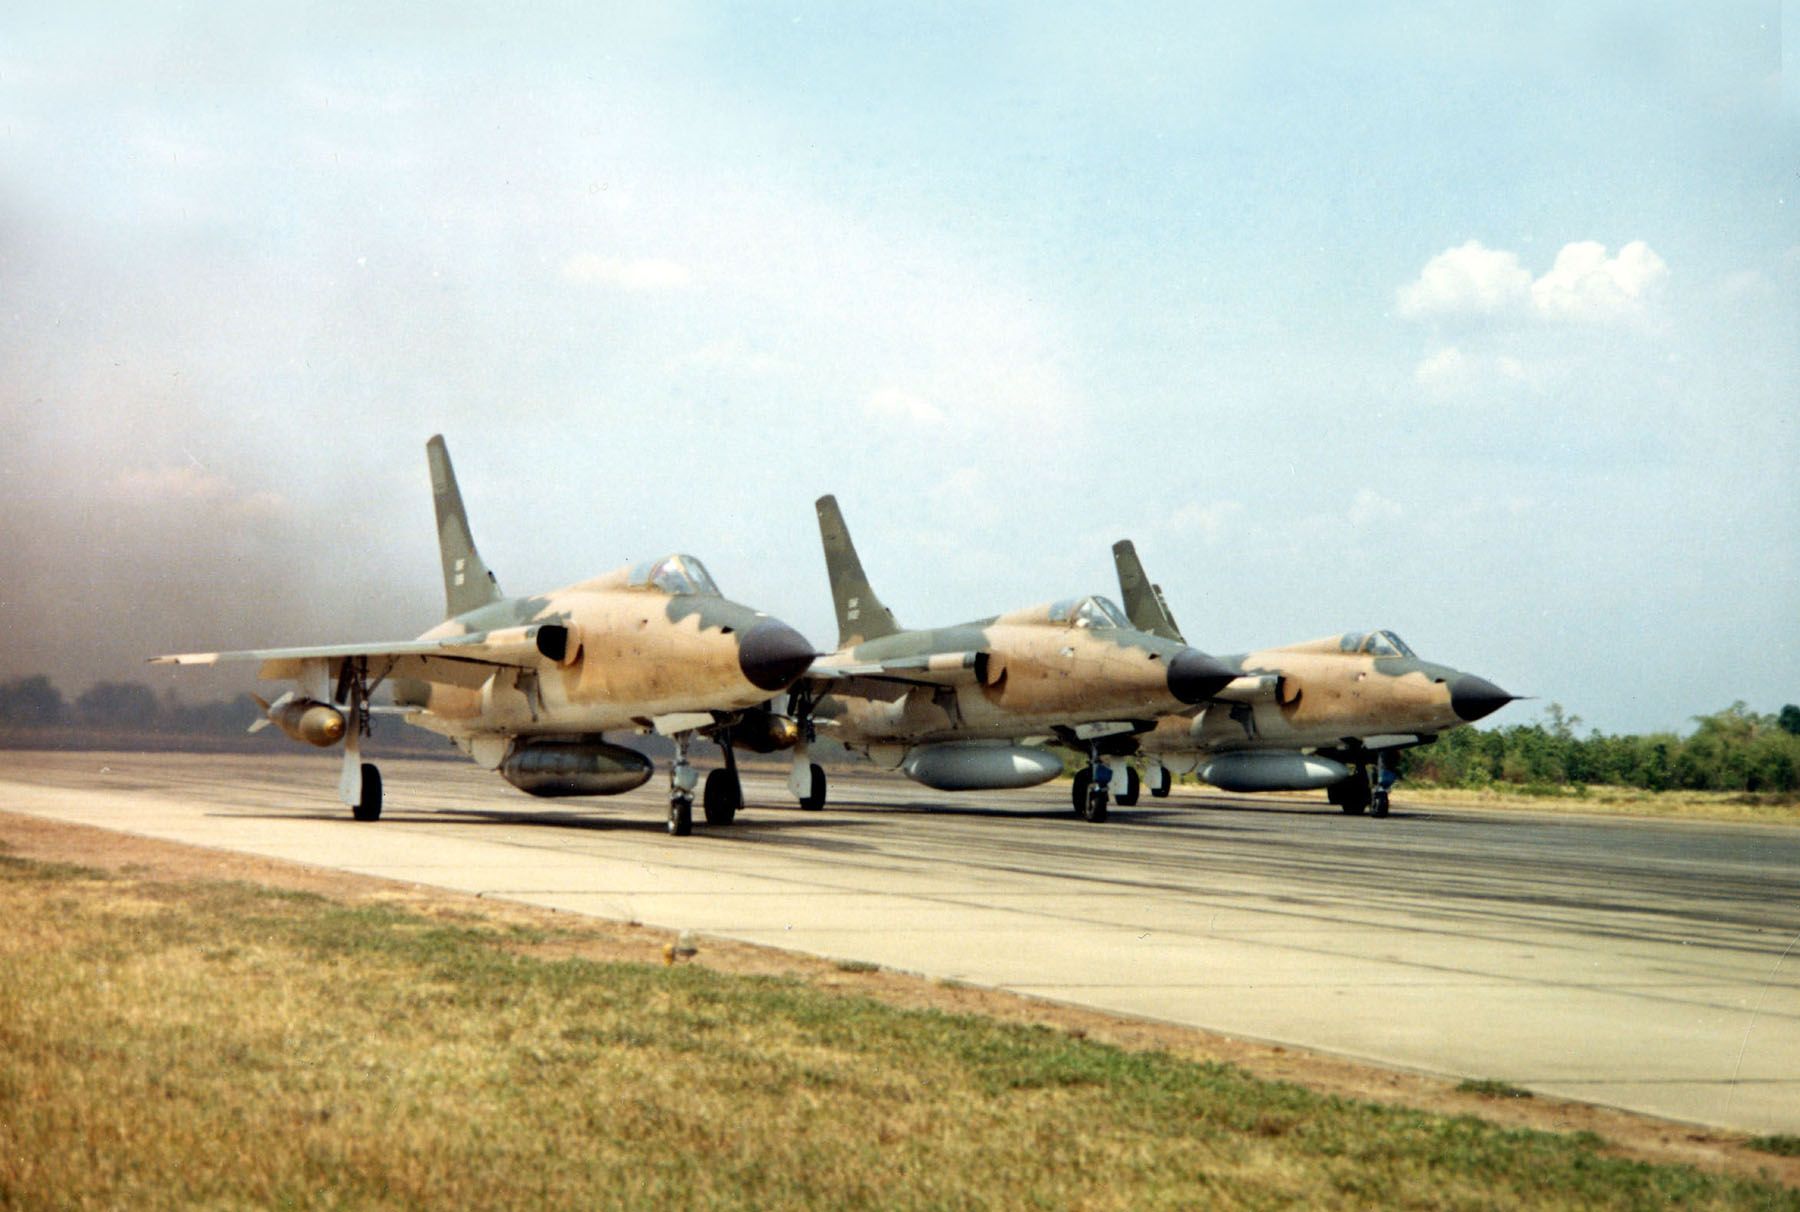 Three F-105 Thunderchiefs on an airfield in Vietnam.